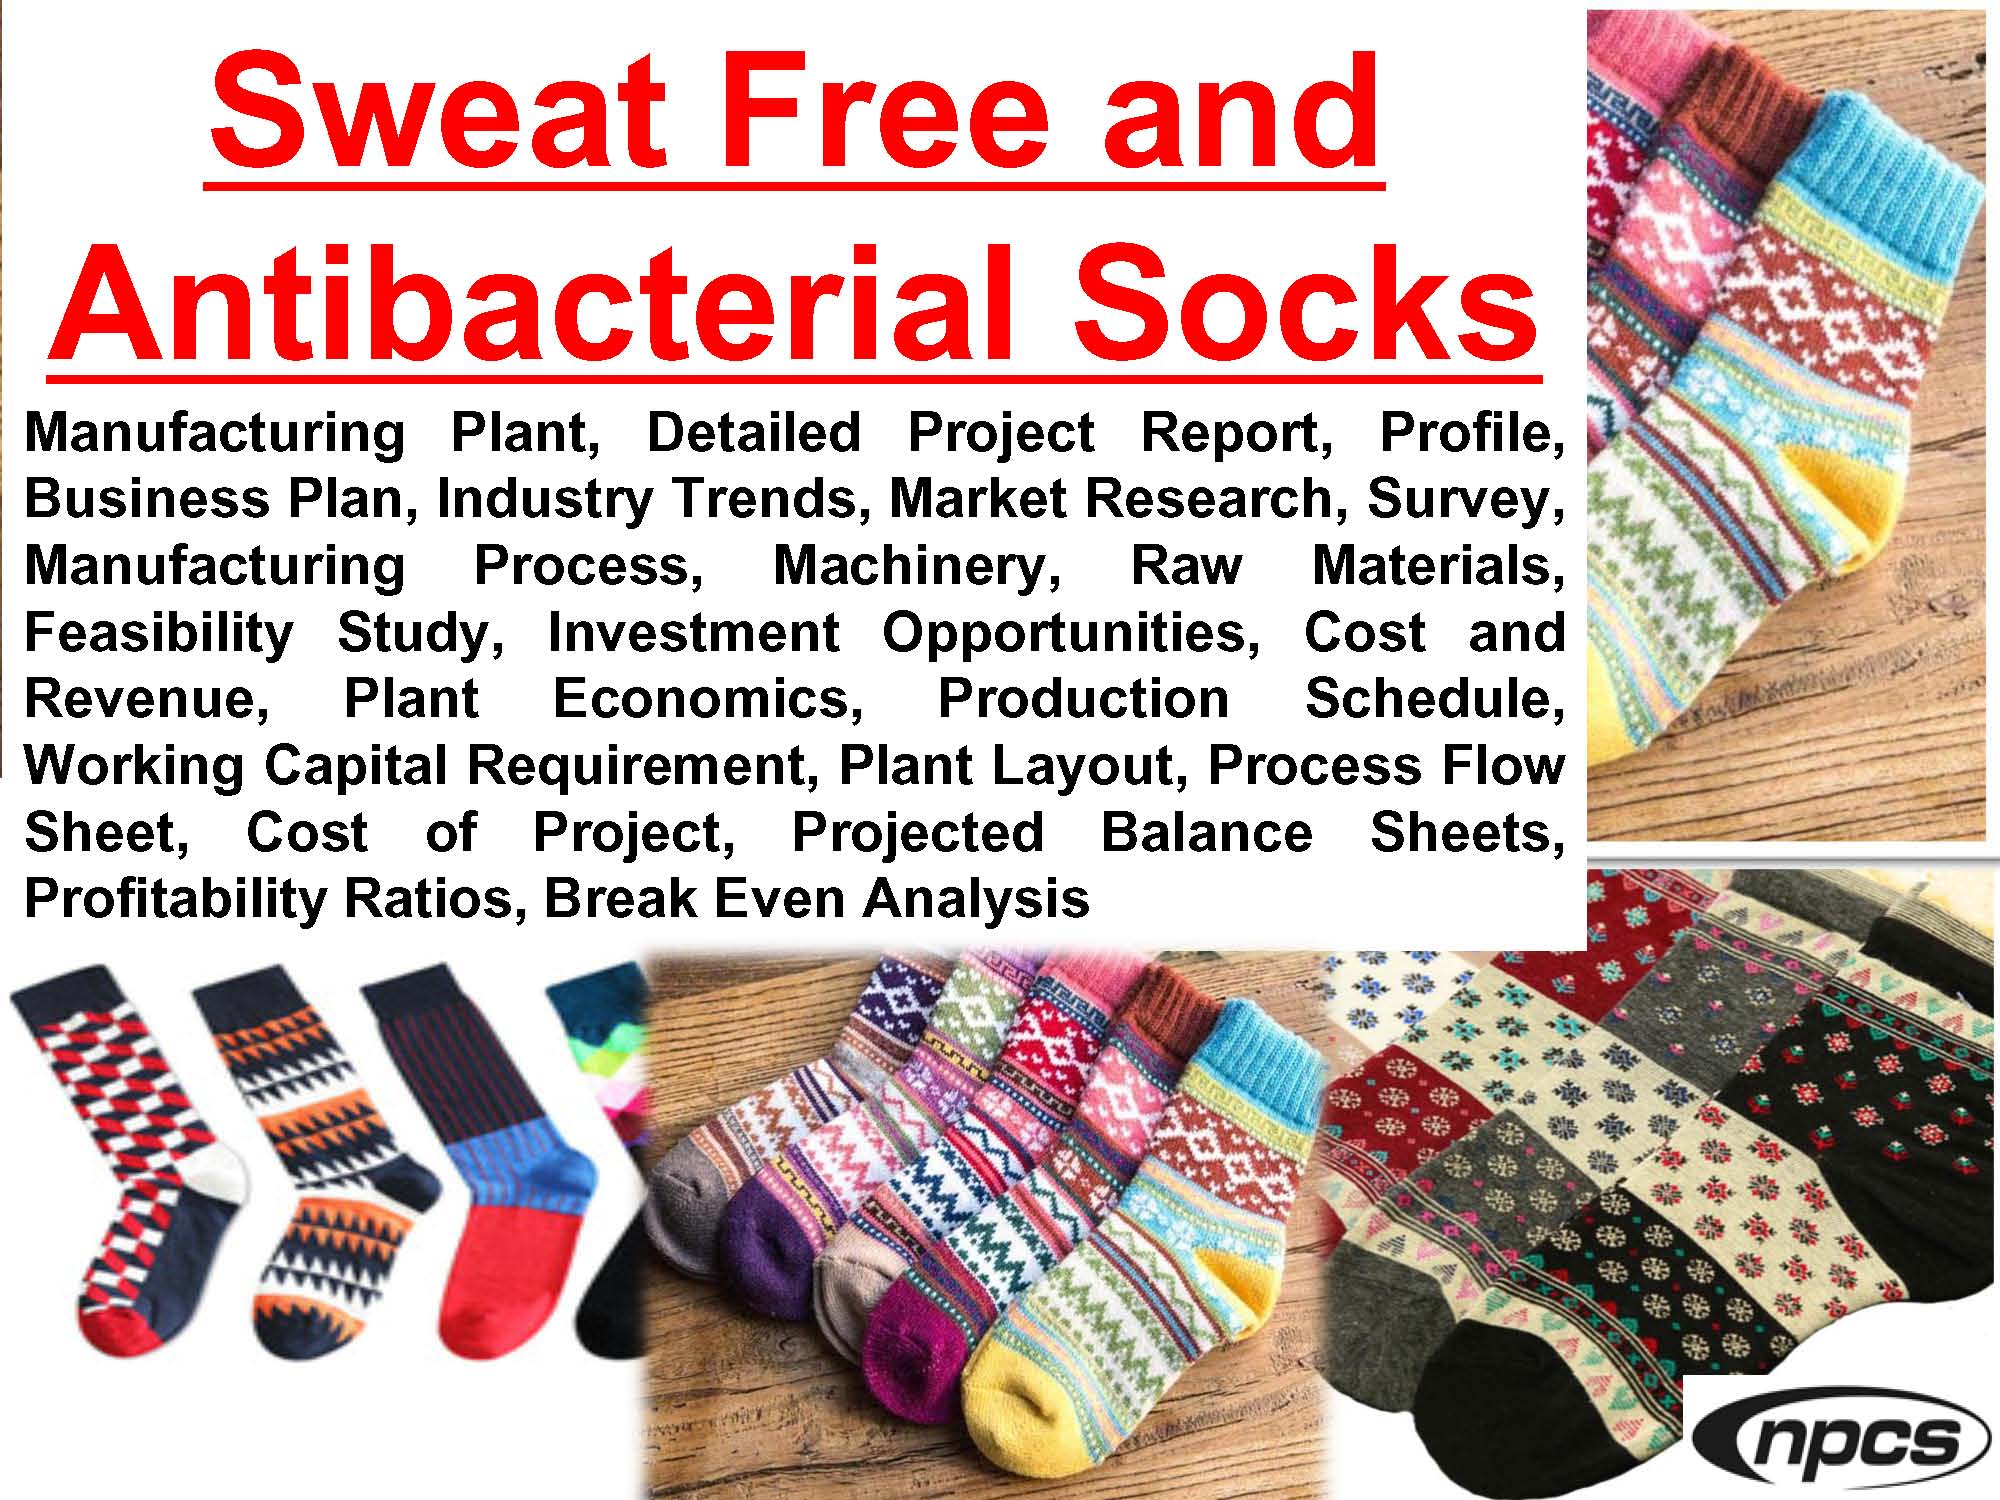 Sweat Free and Antibacterial Socks.jpg